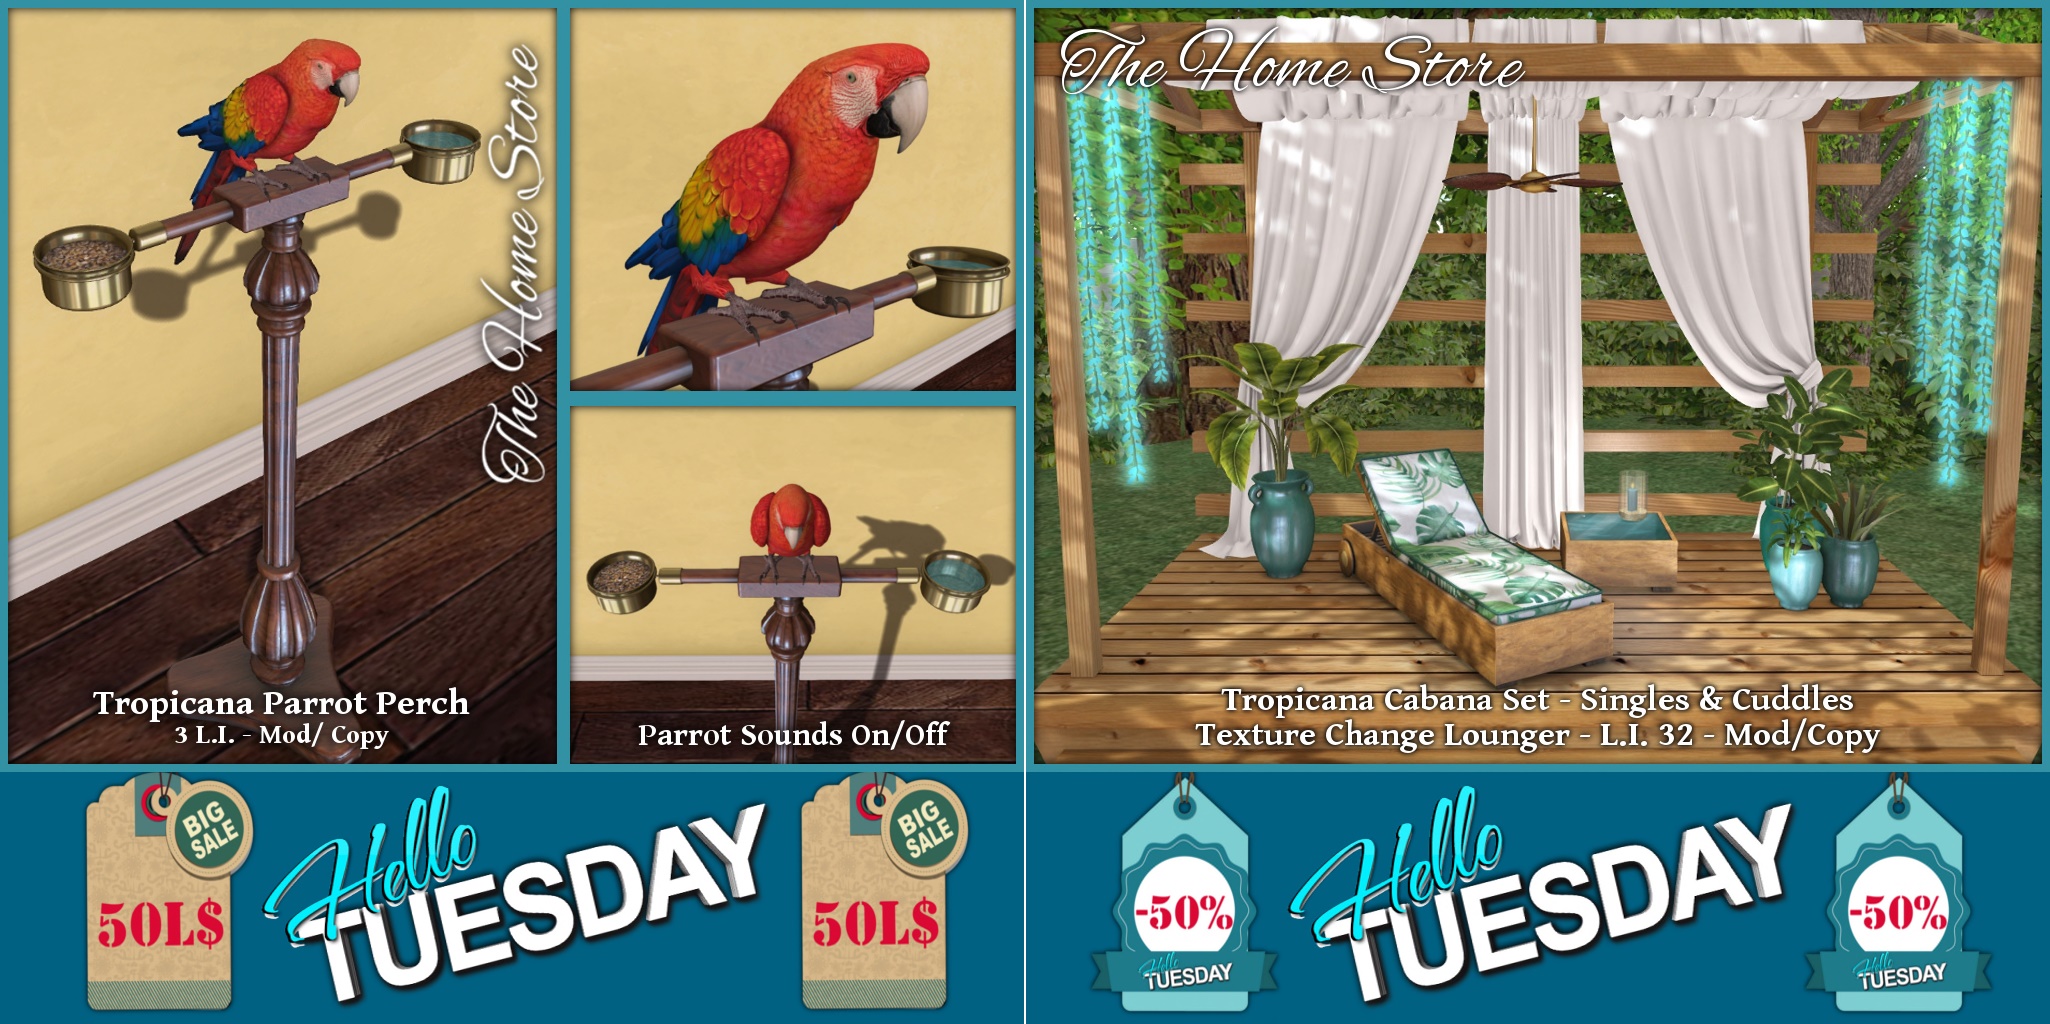 The Home Store – Tropicana Parrot Perch & Tropicana Cabana Set